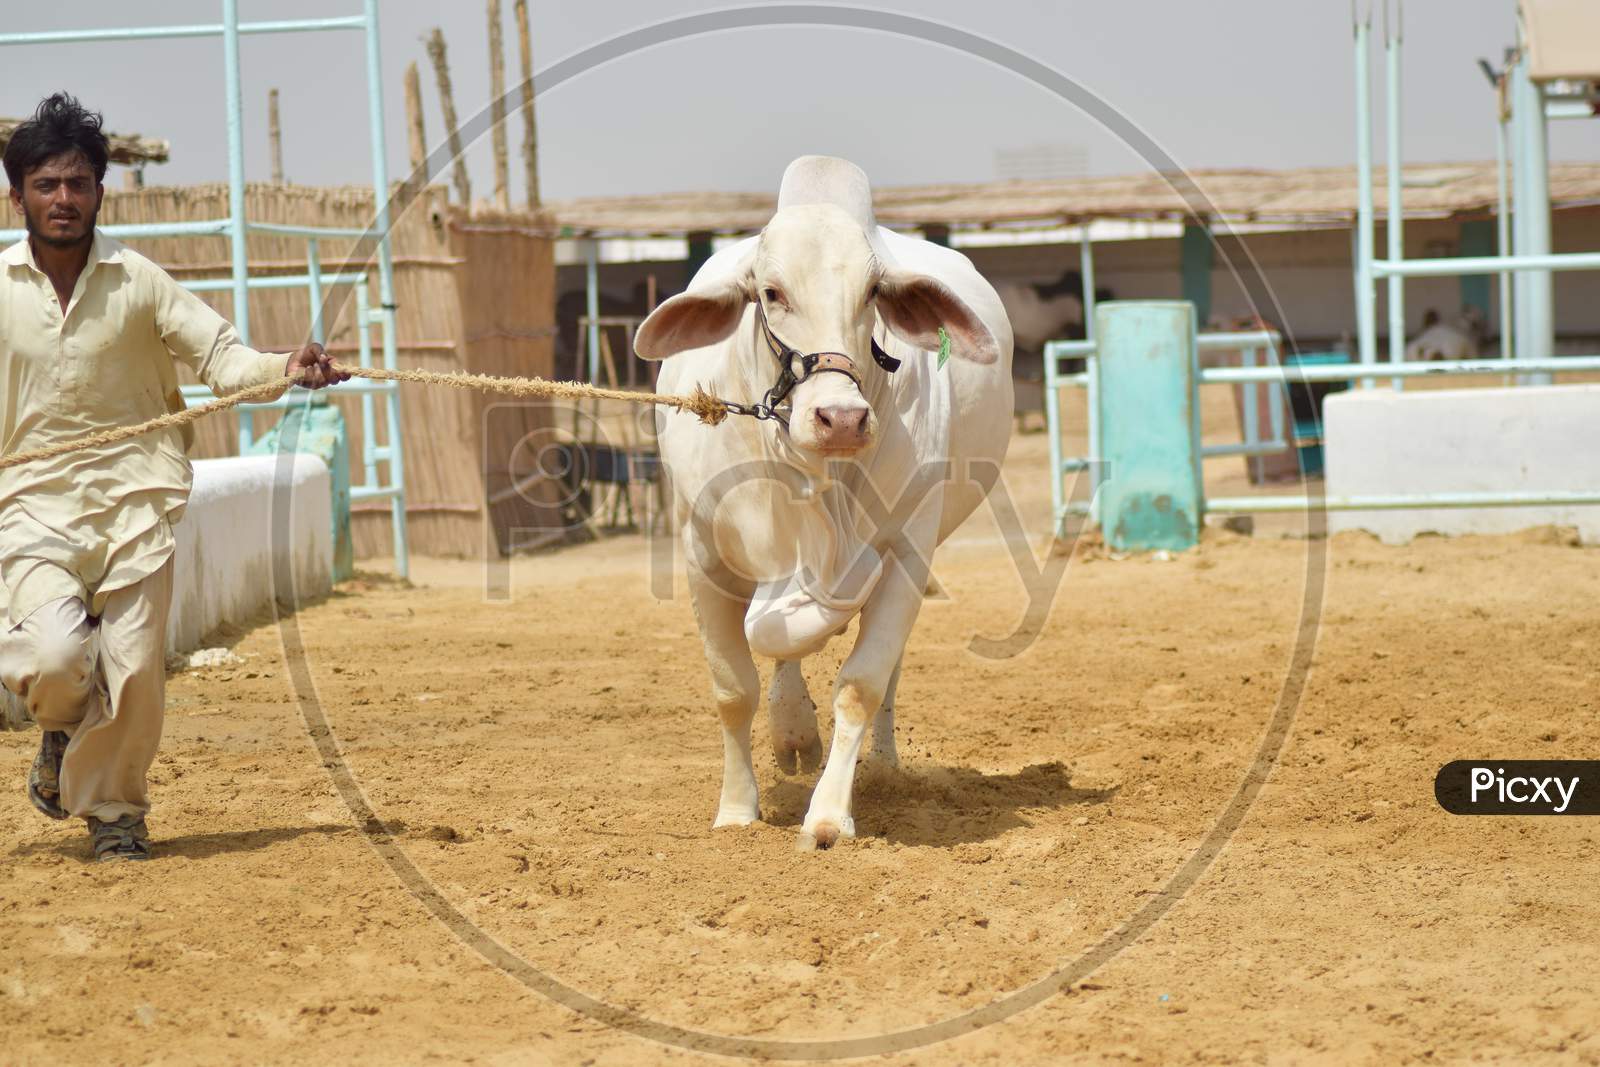 A Man pulling White Bull in Cattle Farm